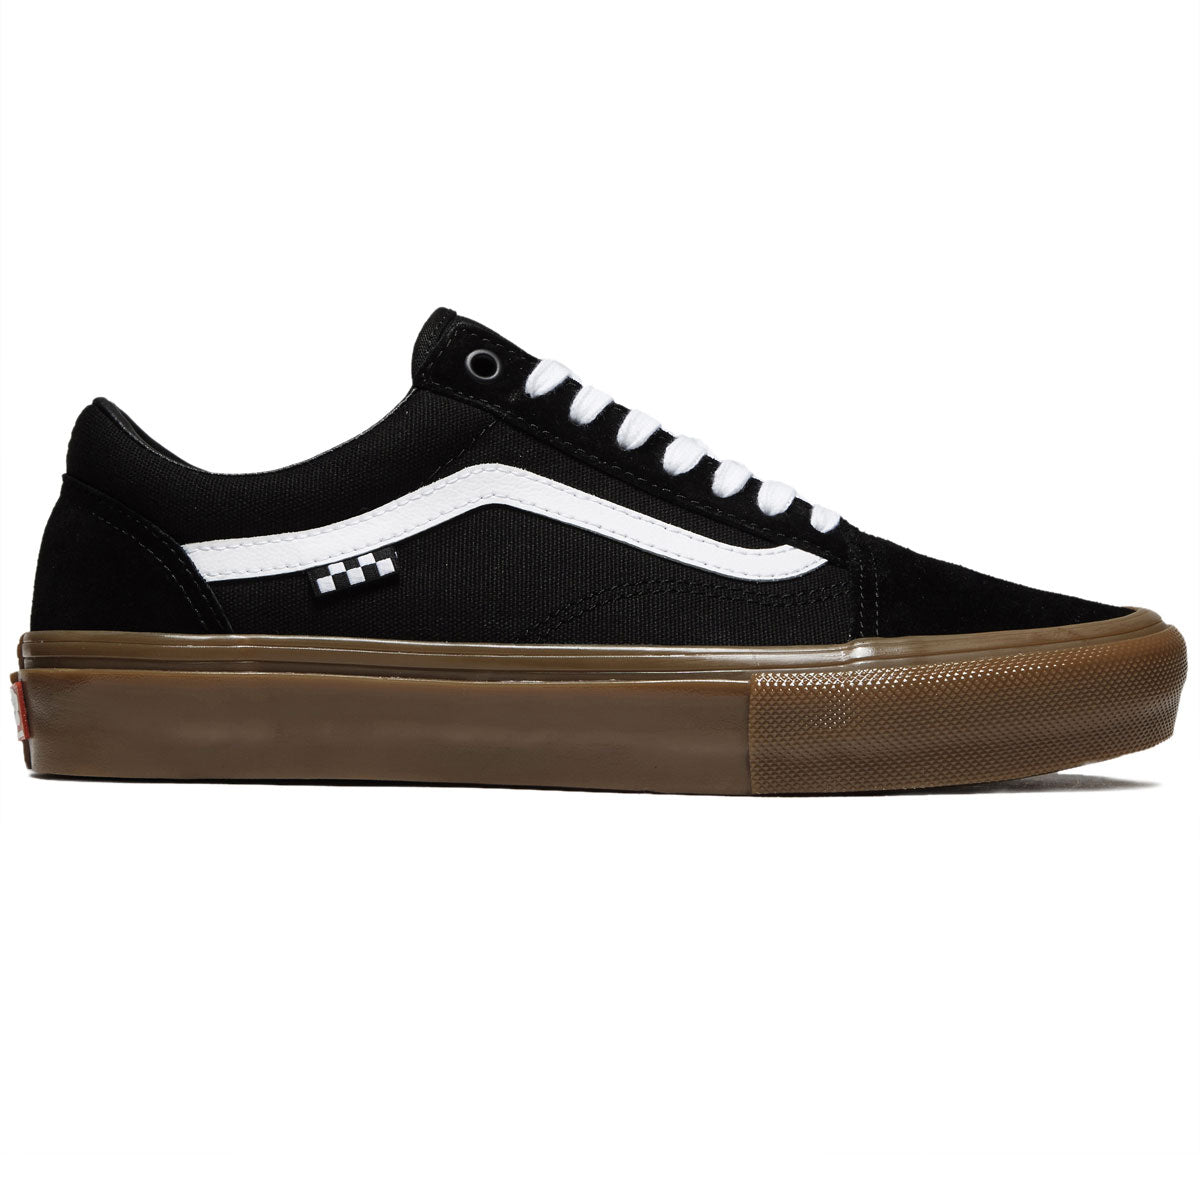 Vans Skate Old Skool Shoes - Black/Gum image 1